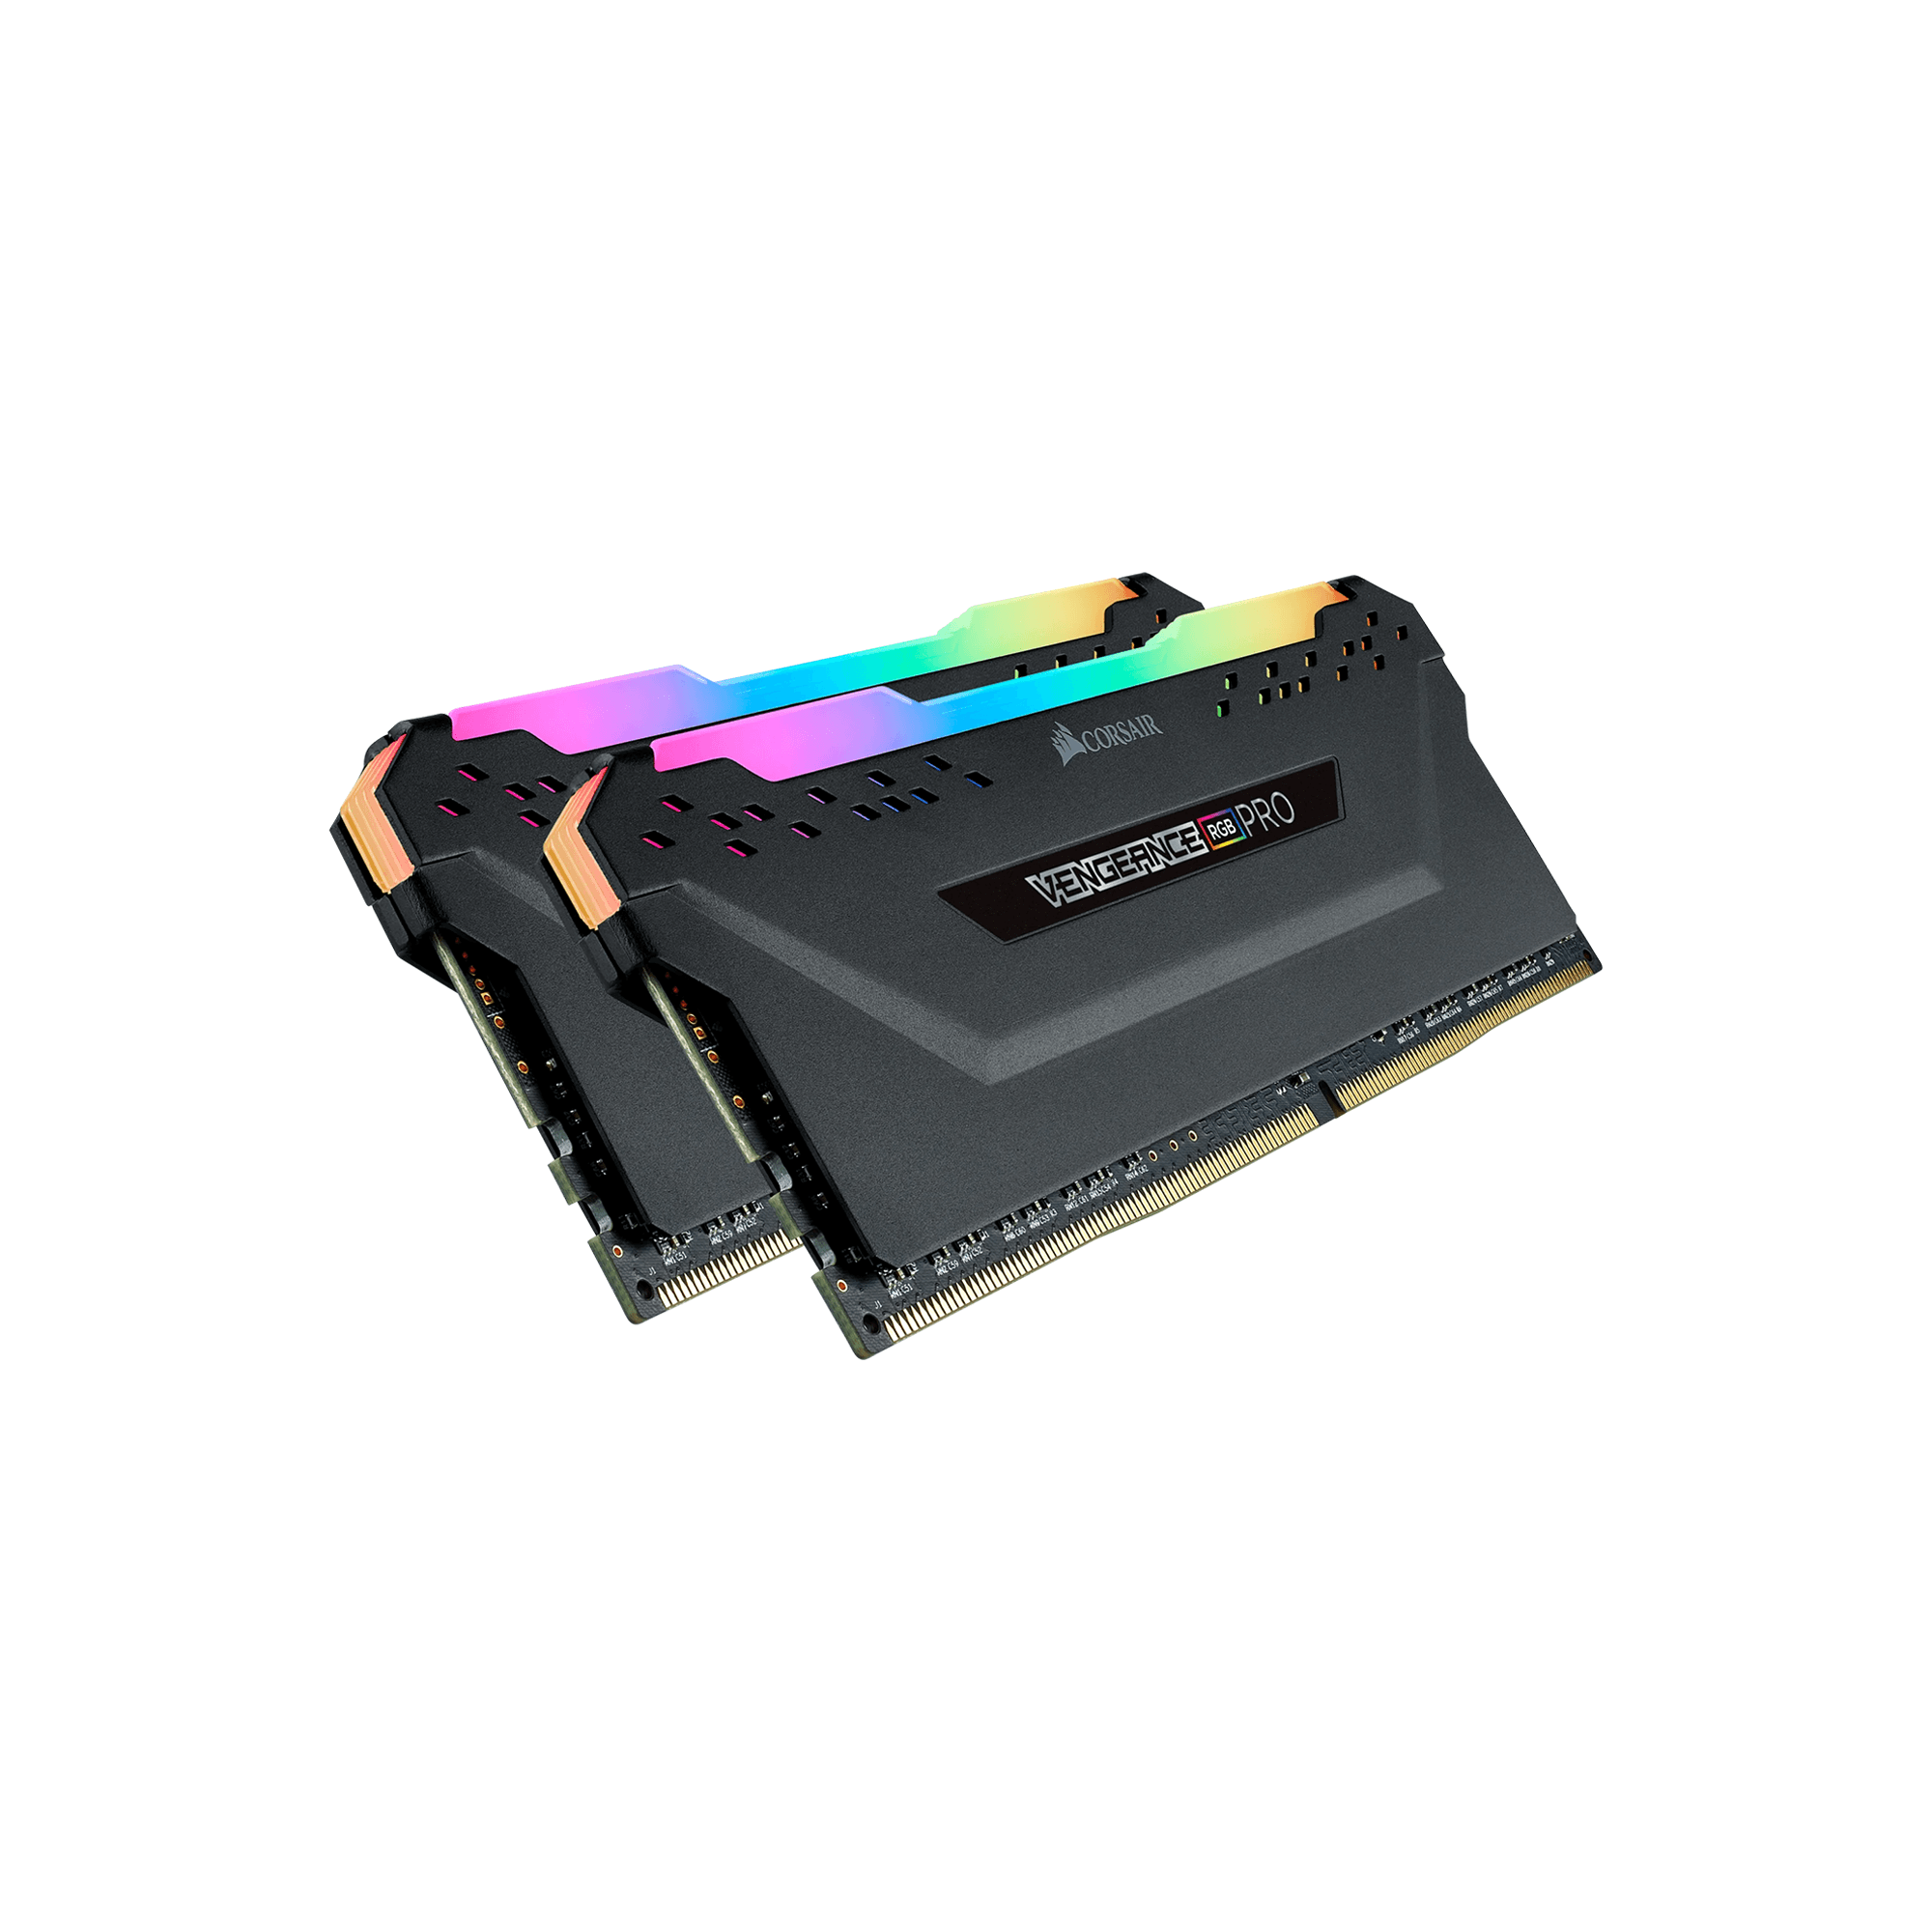 Corsair Vengeance RGB PRO 32GB (2 x 16GB) DDR4 DRAM 3200MHz C16 Memory Kit (Black)